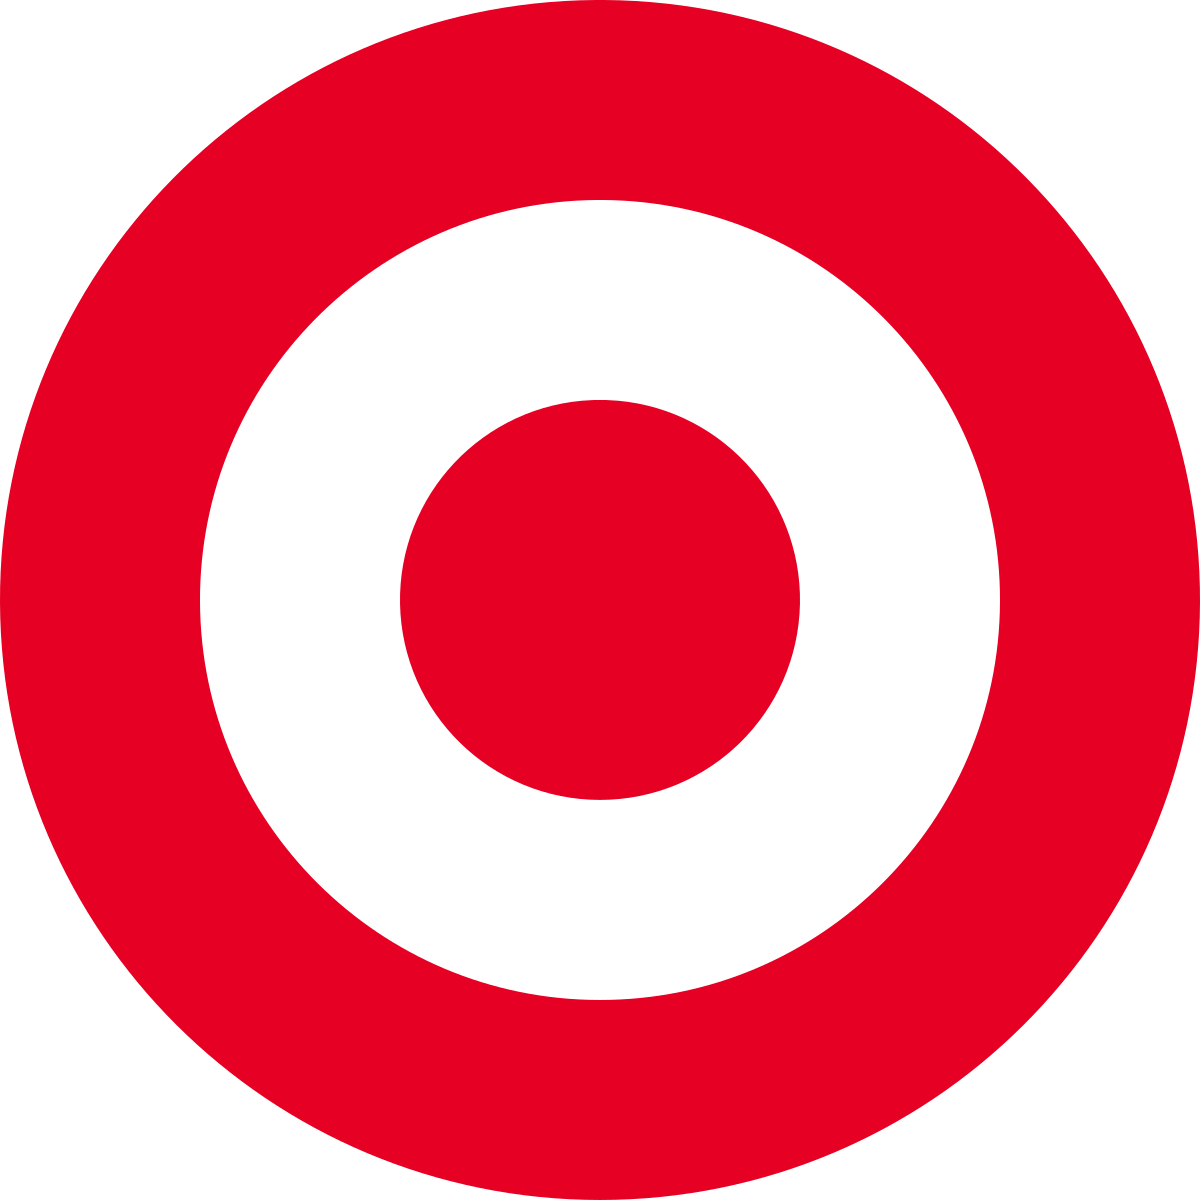 American Retailer Red Logo - Target Corporation